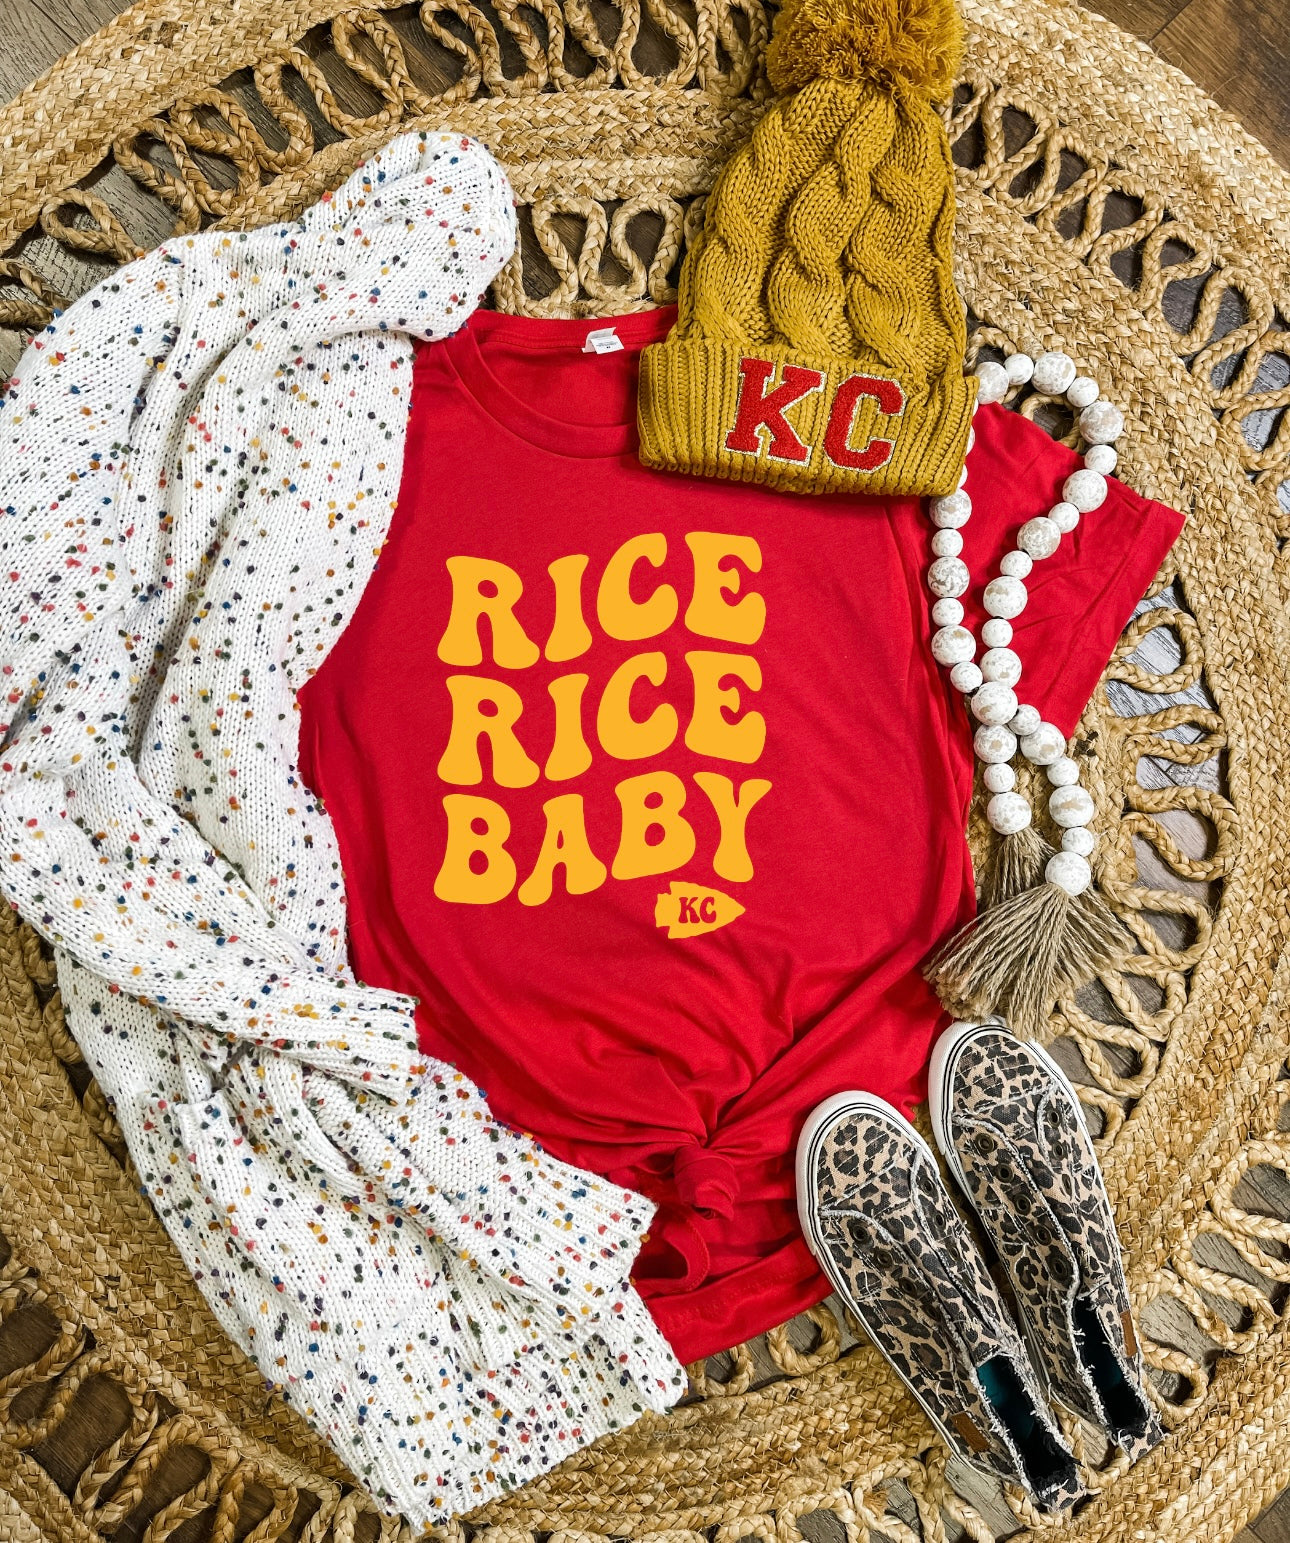 Rice Rice Baby Red Option